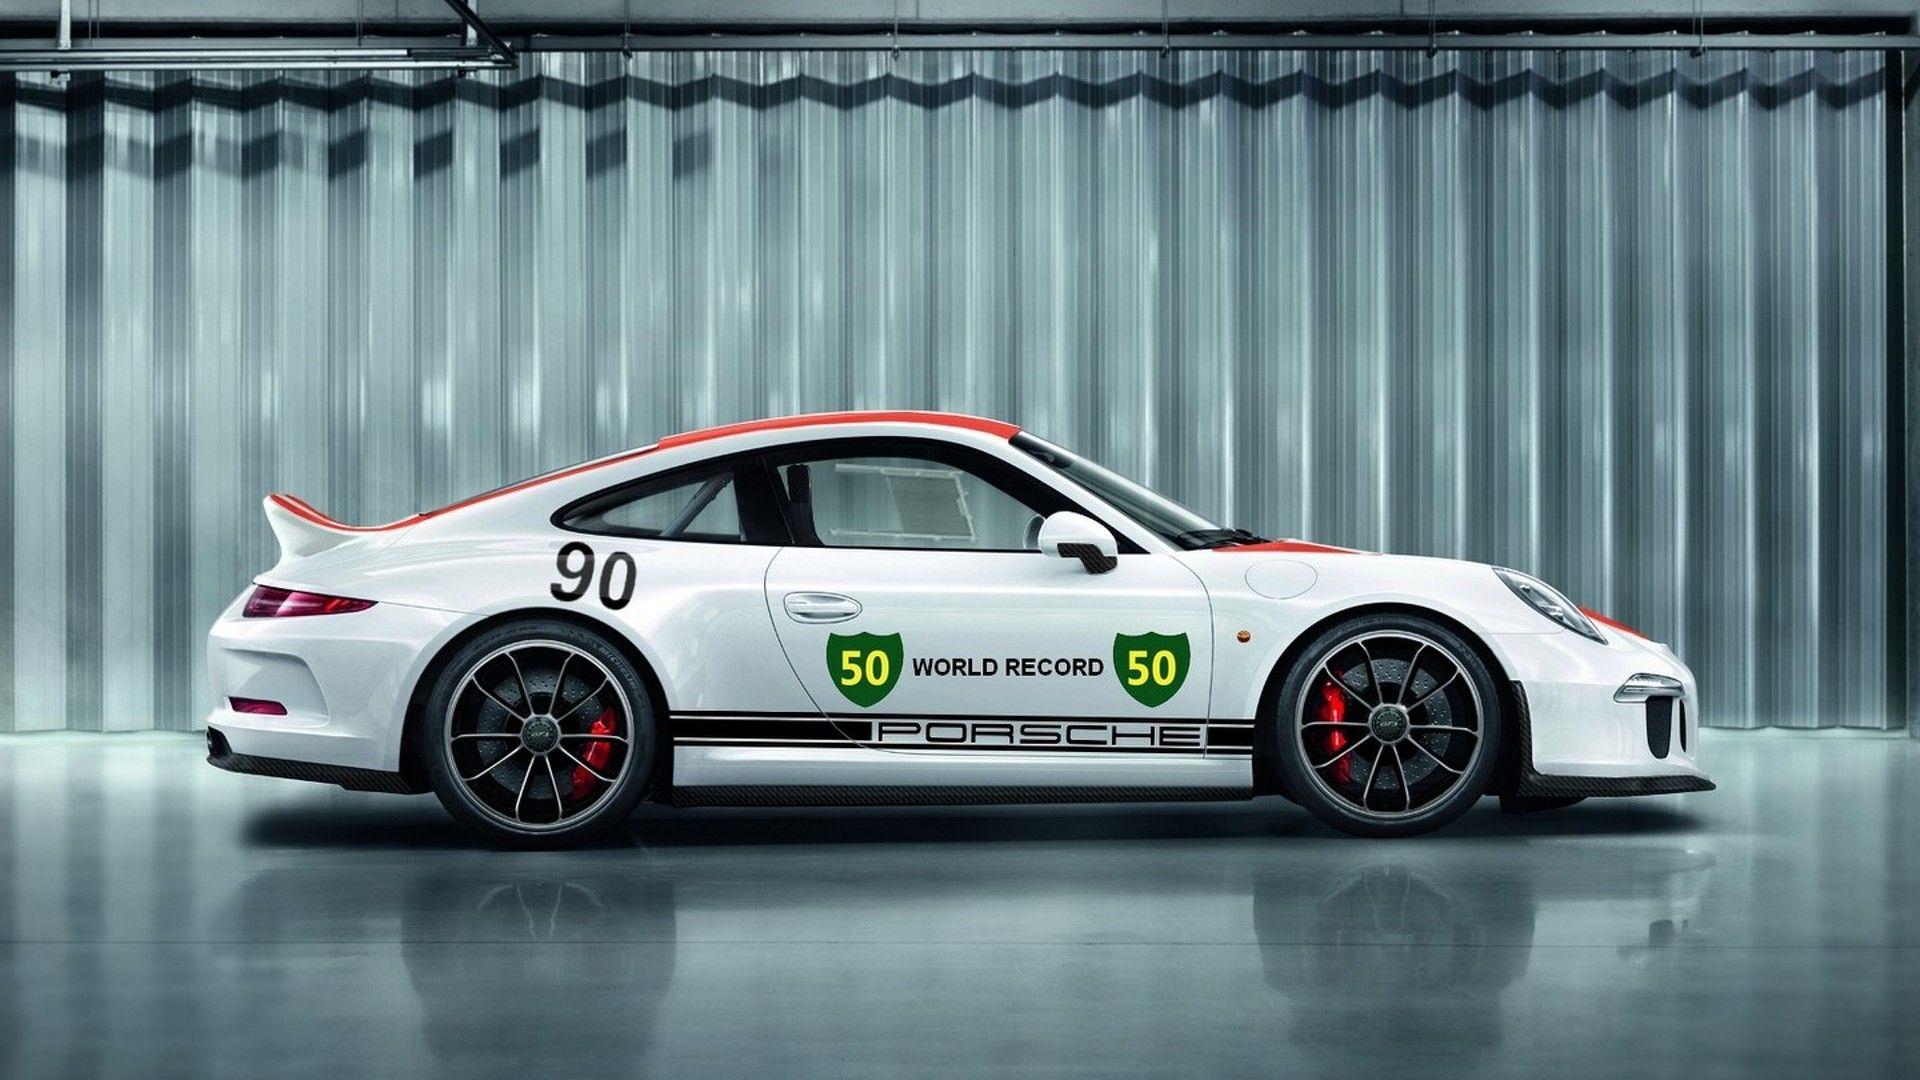 Reader's Porsche 911 R render looks like it came from Porsche